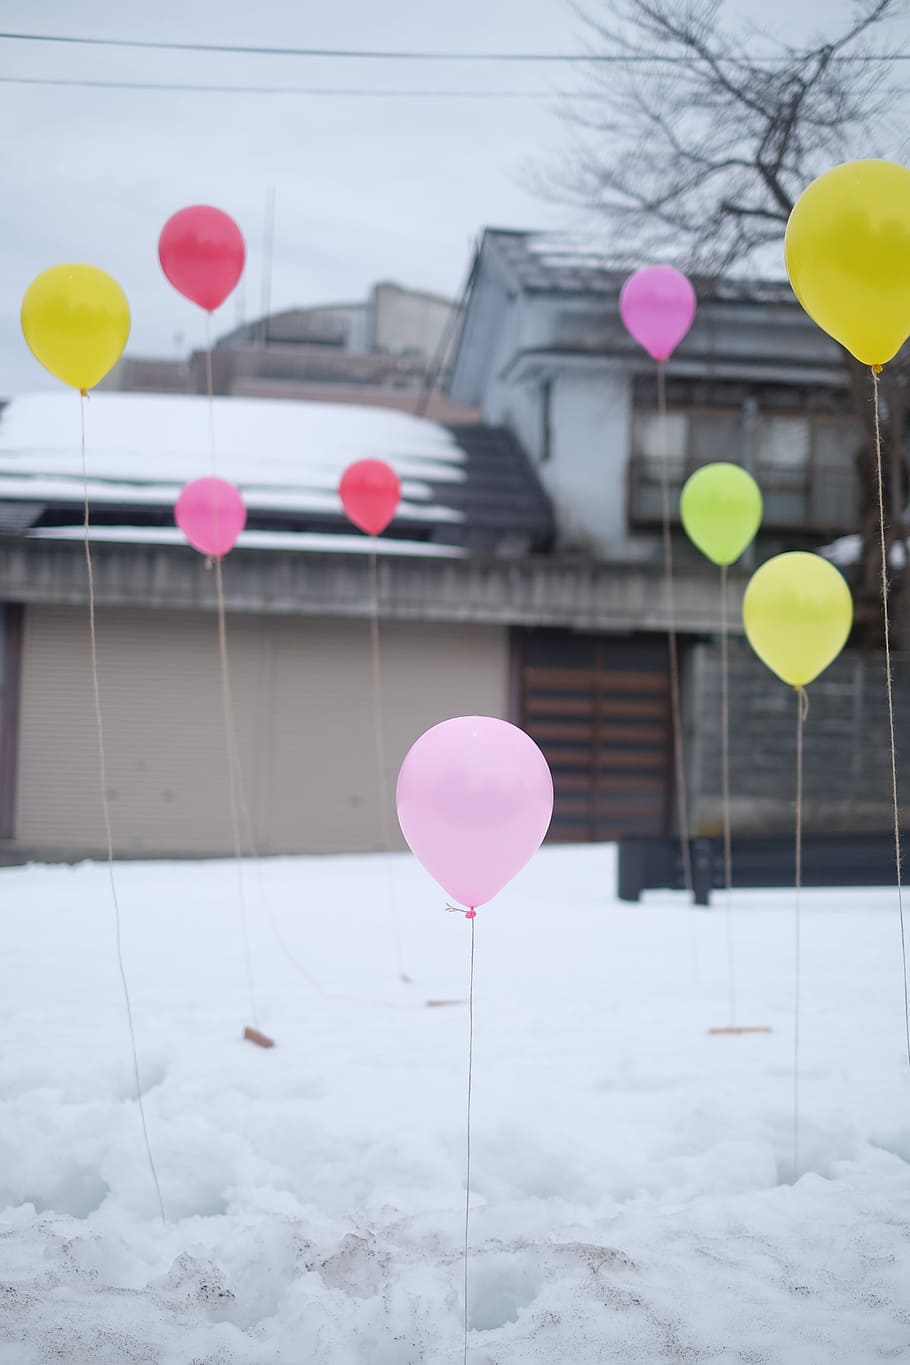 balon, pesta, salju, jalan masuk, rumah, musim dingin, dingin, ulang tahun, warna merah muda, arsitektur